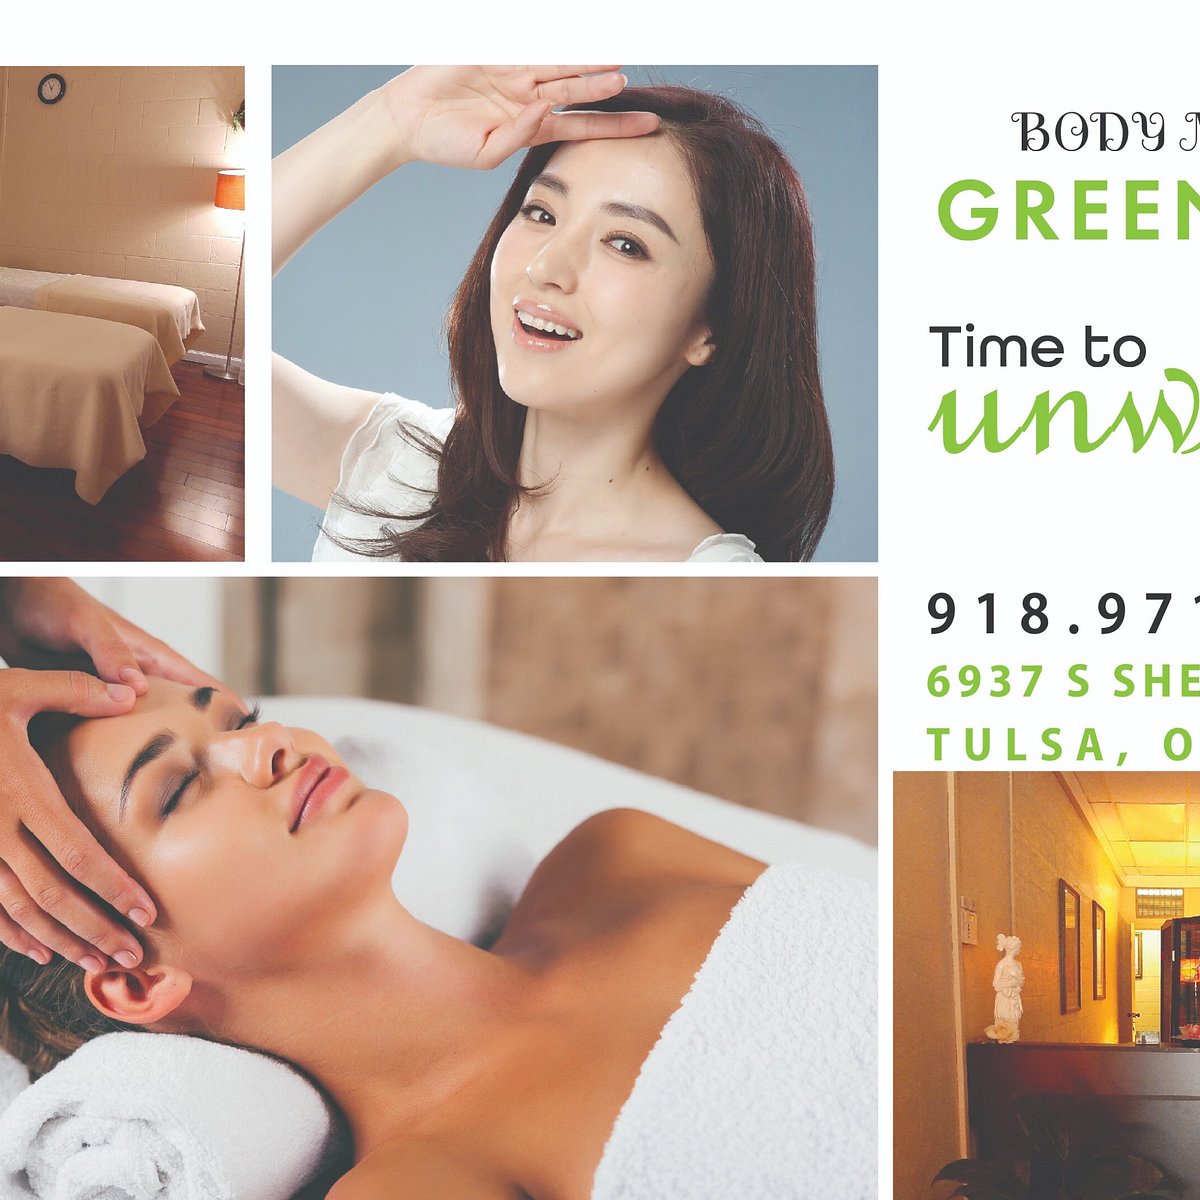 Tulsa Massage Green Spa Ok Hours Address Tripadvisor